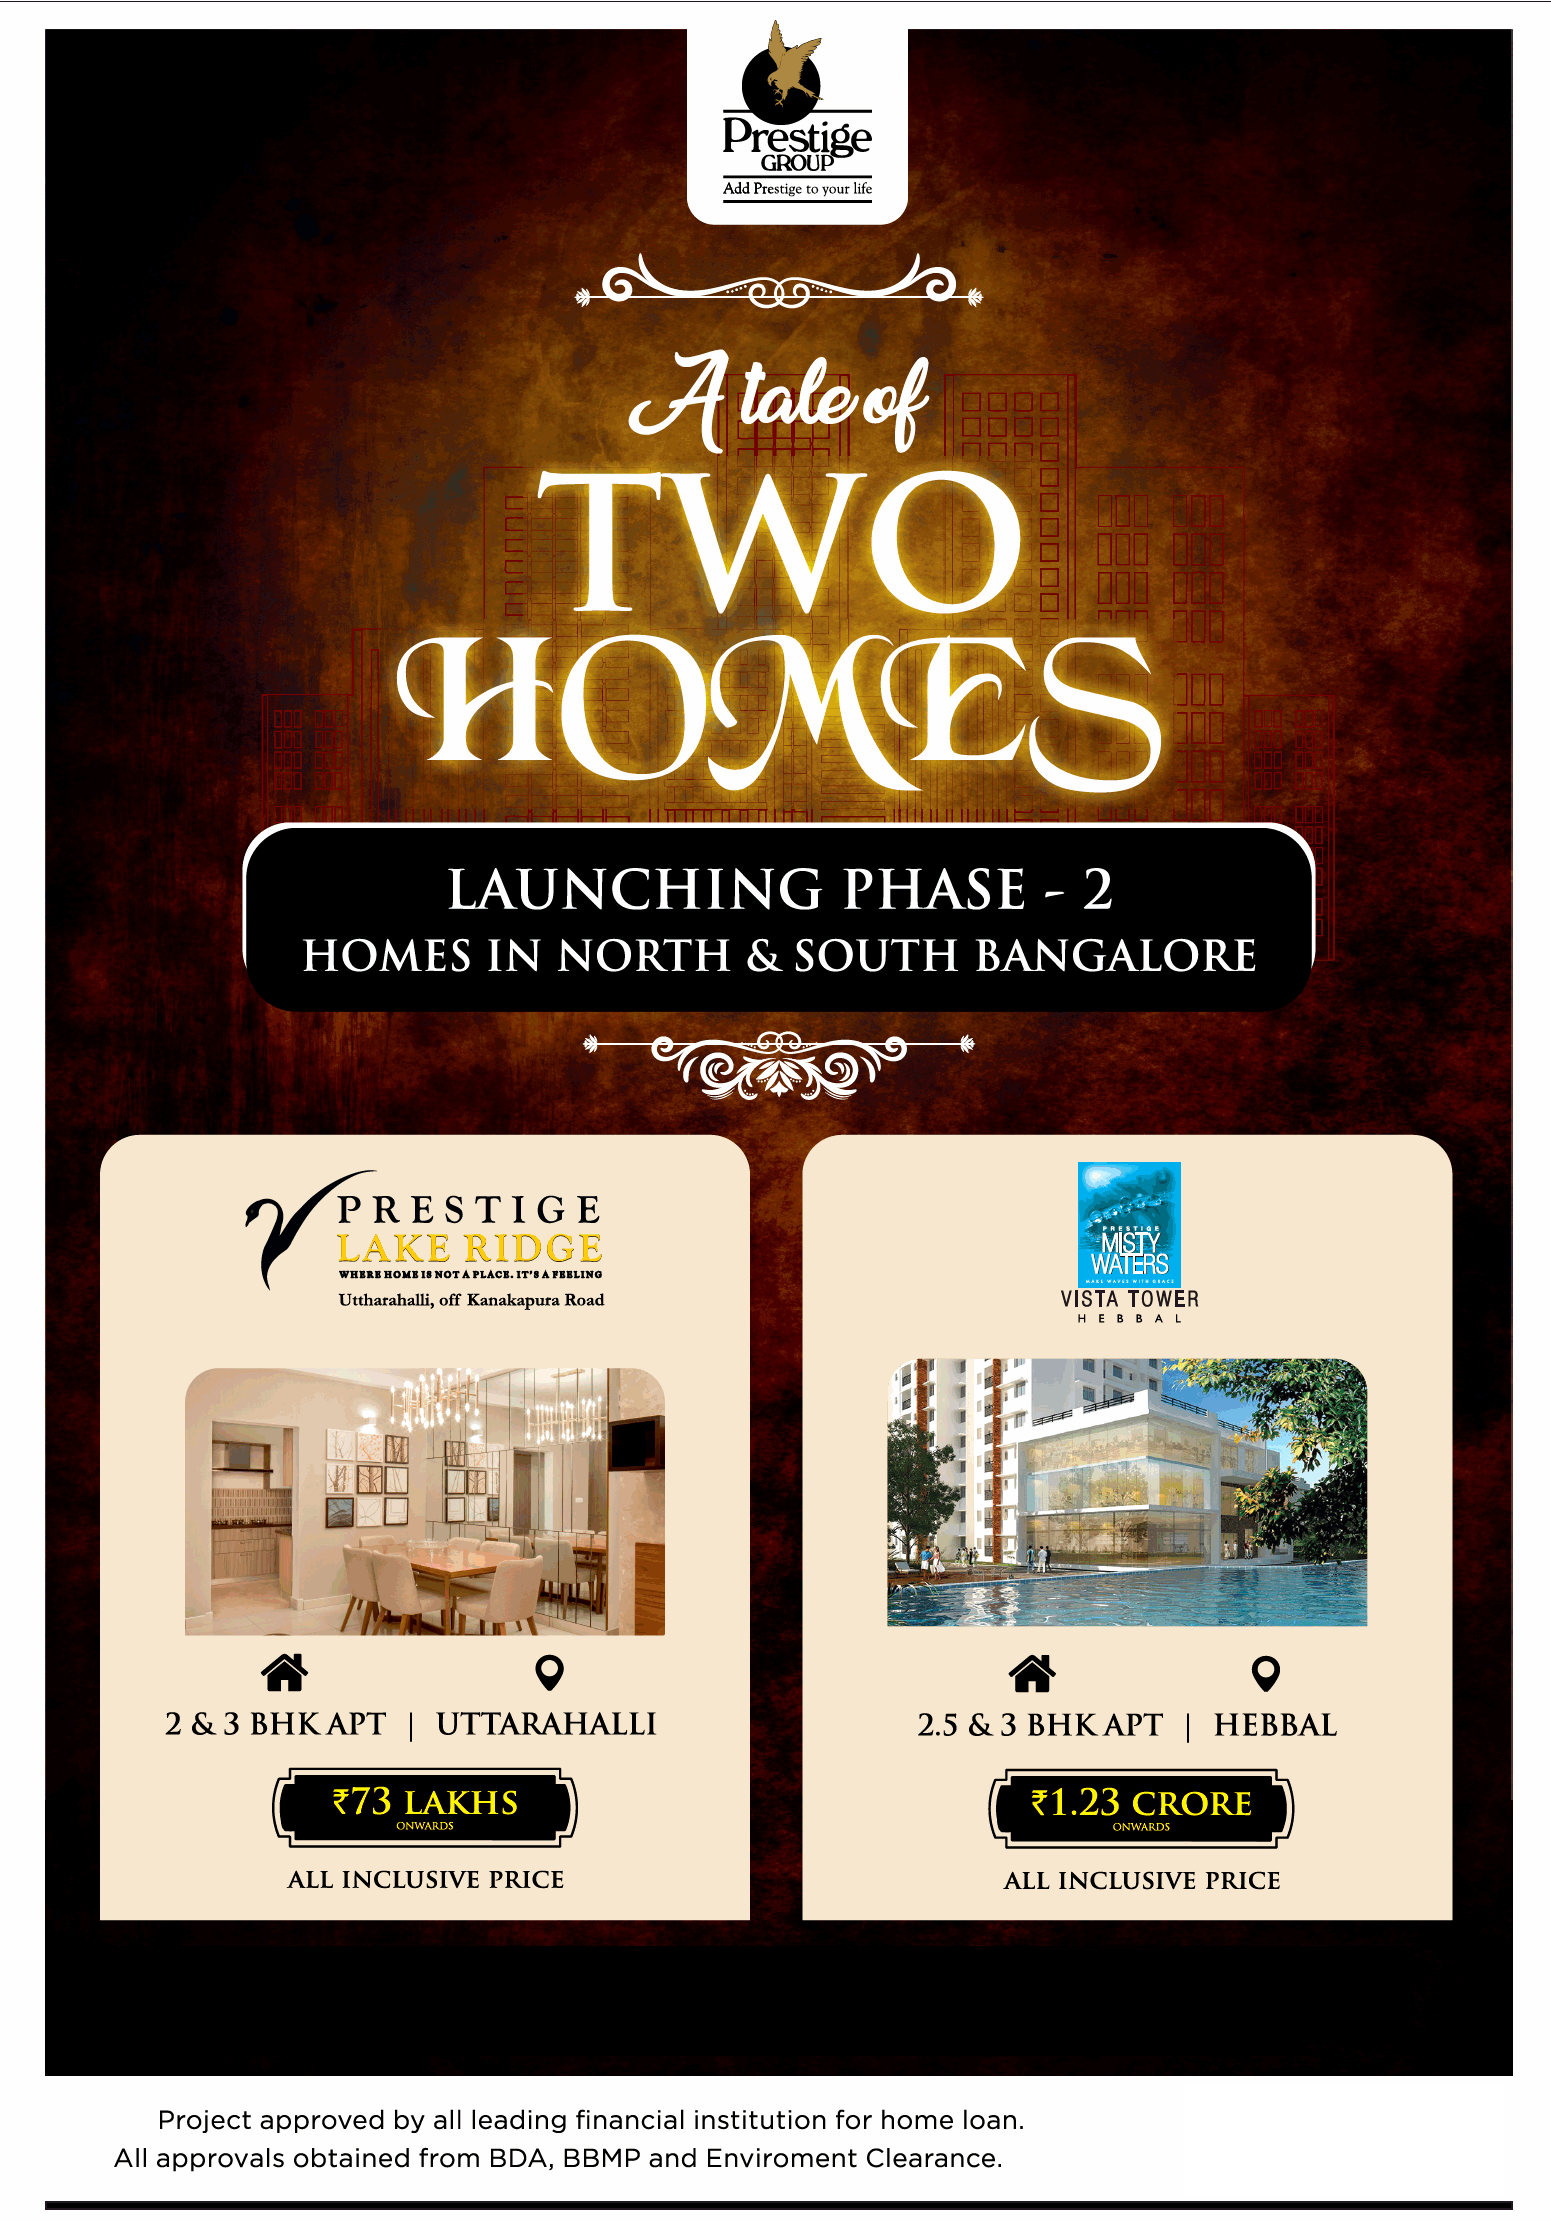 Prestige launching phase 2 at Lake Ridge & Misty Waters Vista Towers in Bangalore Update